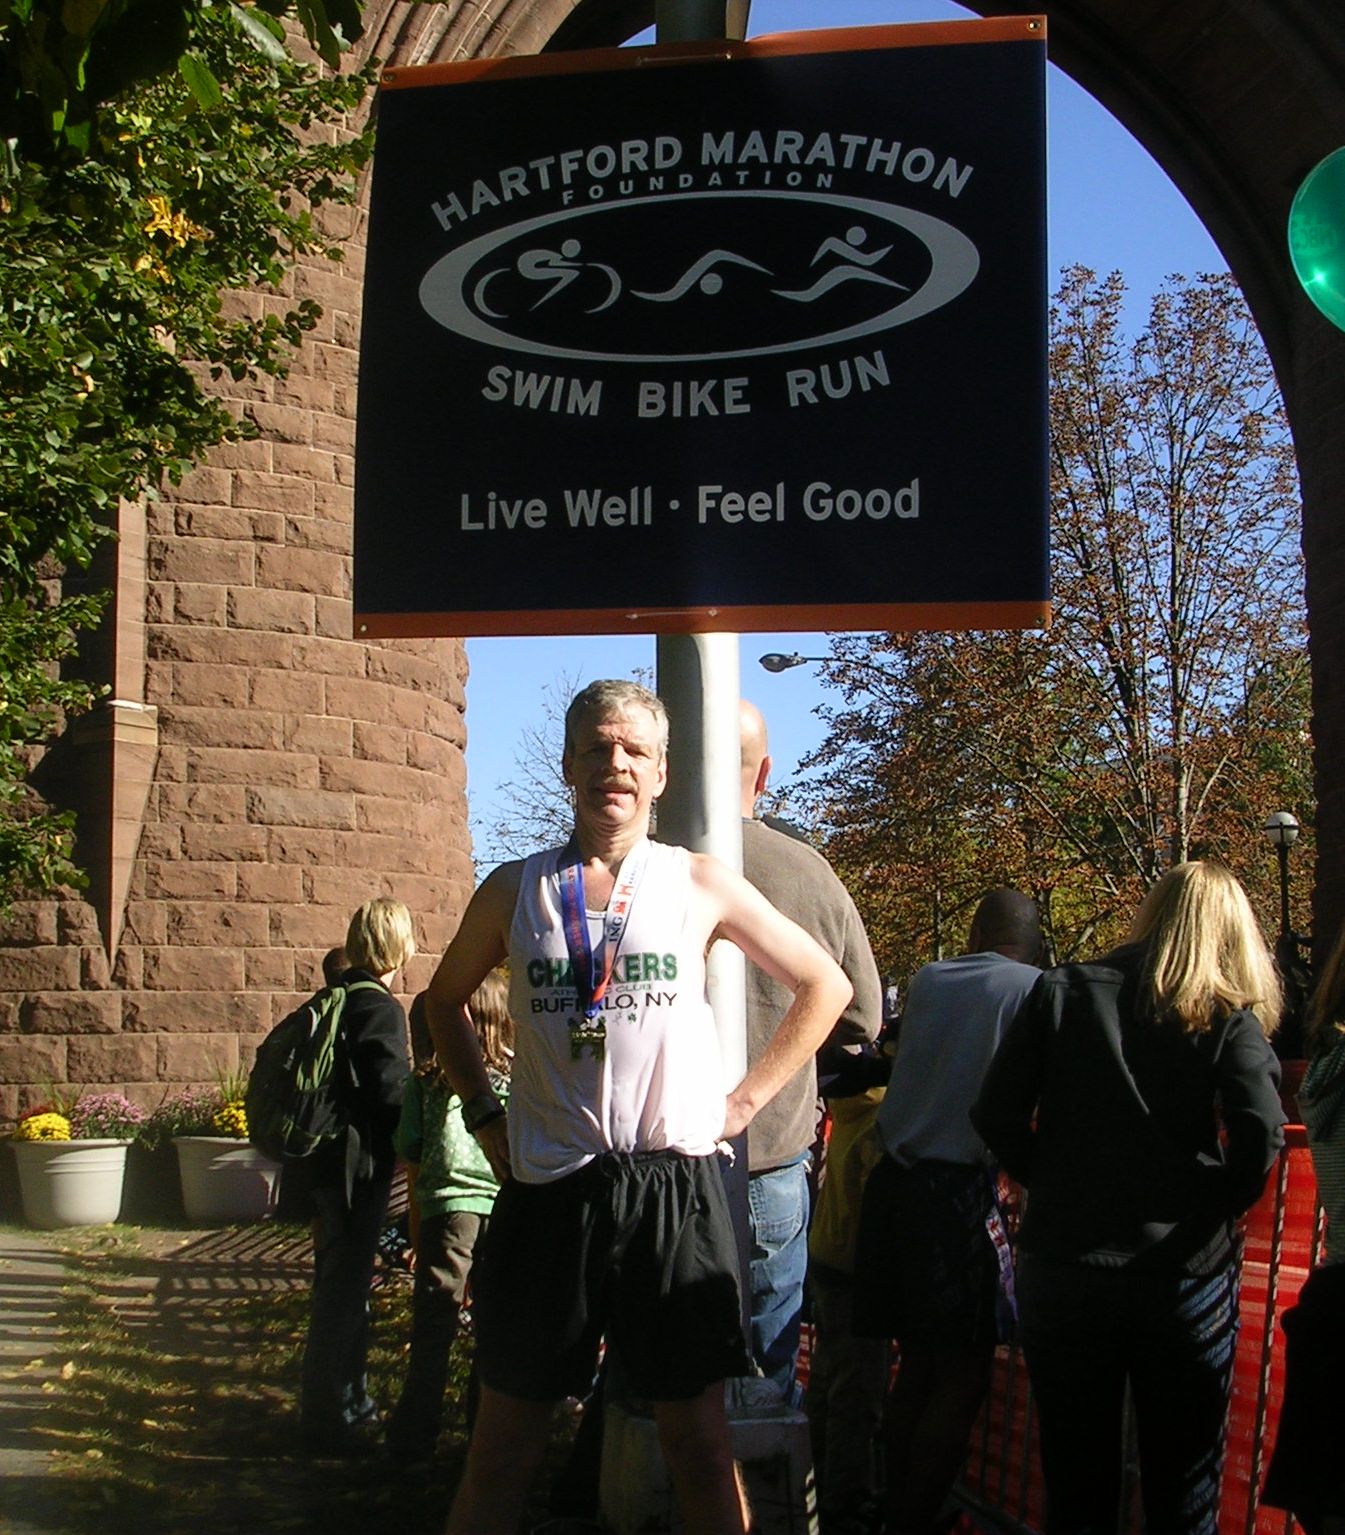 Hartford Half Marathon